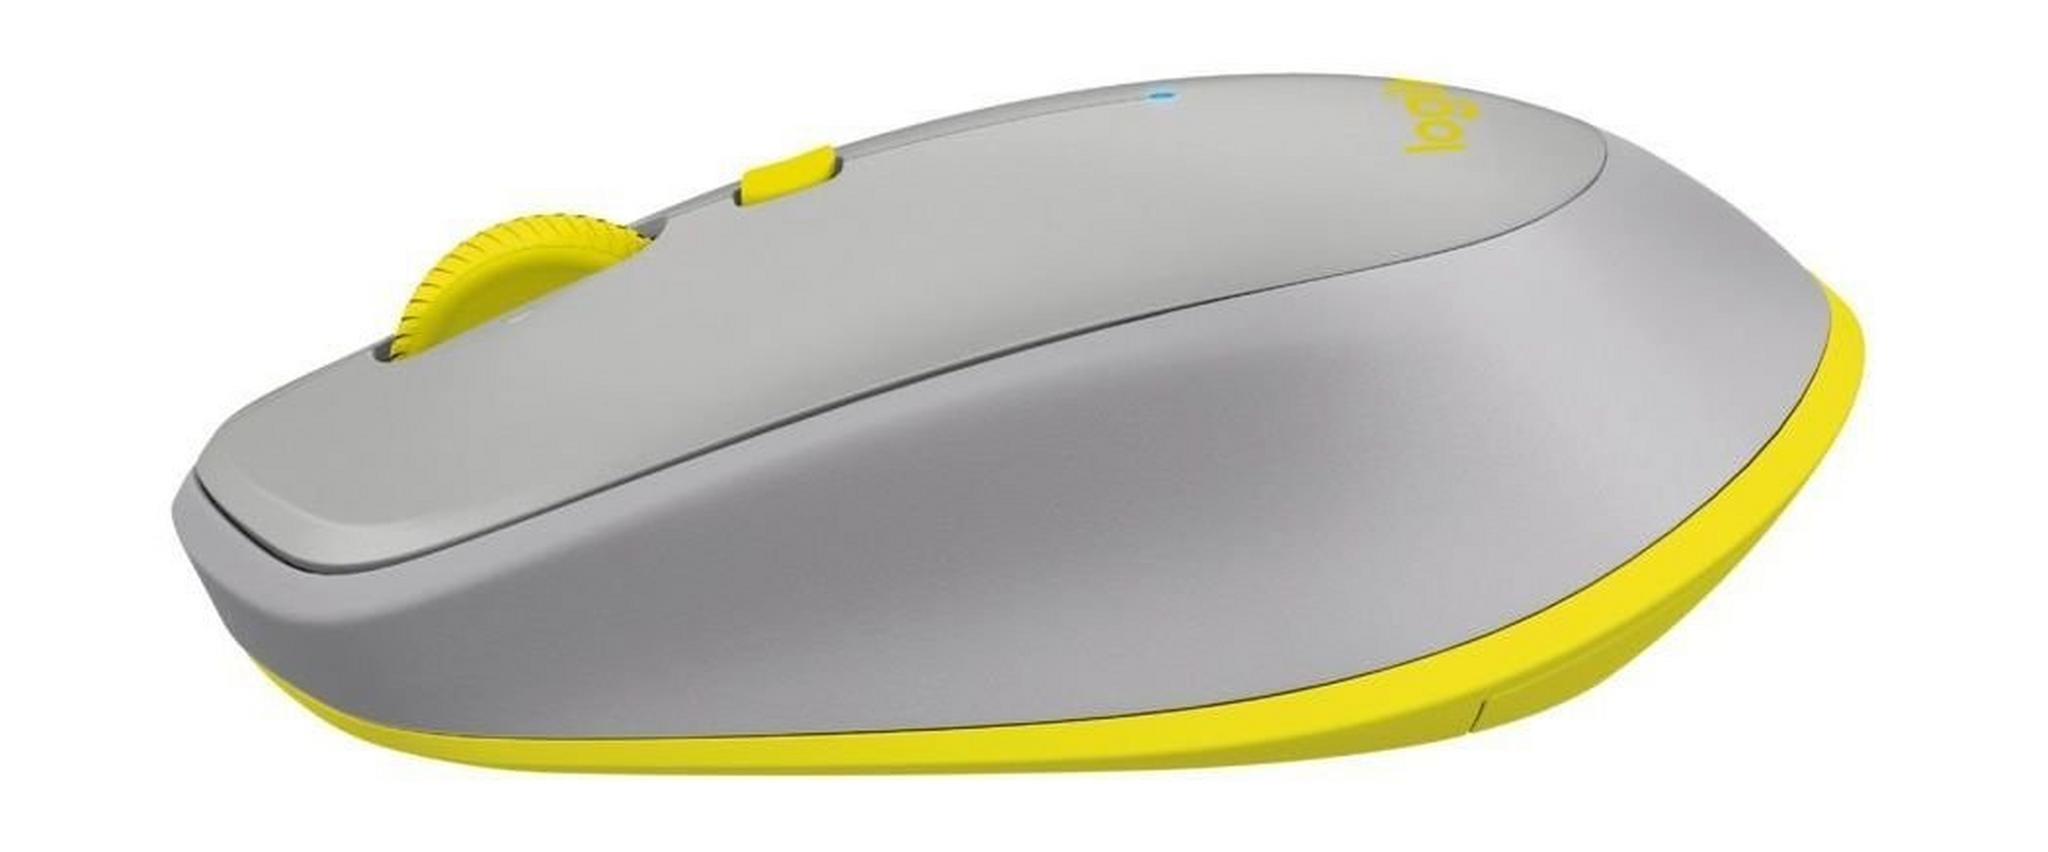 Logitech M535 Bluetooth Wireless Optical Mouse – Grey